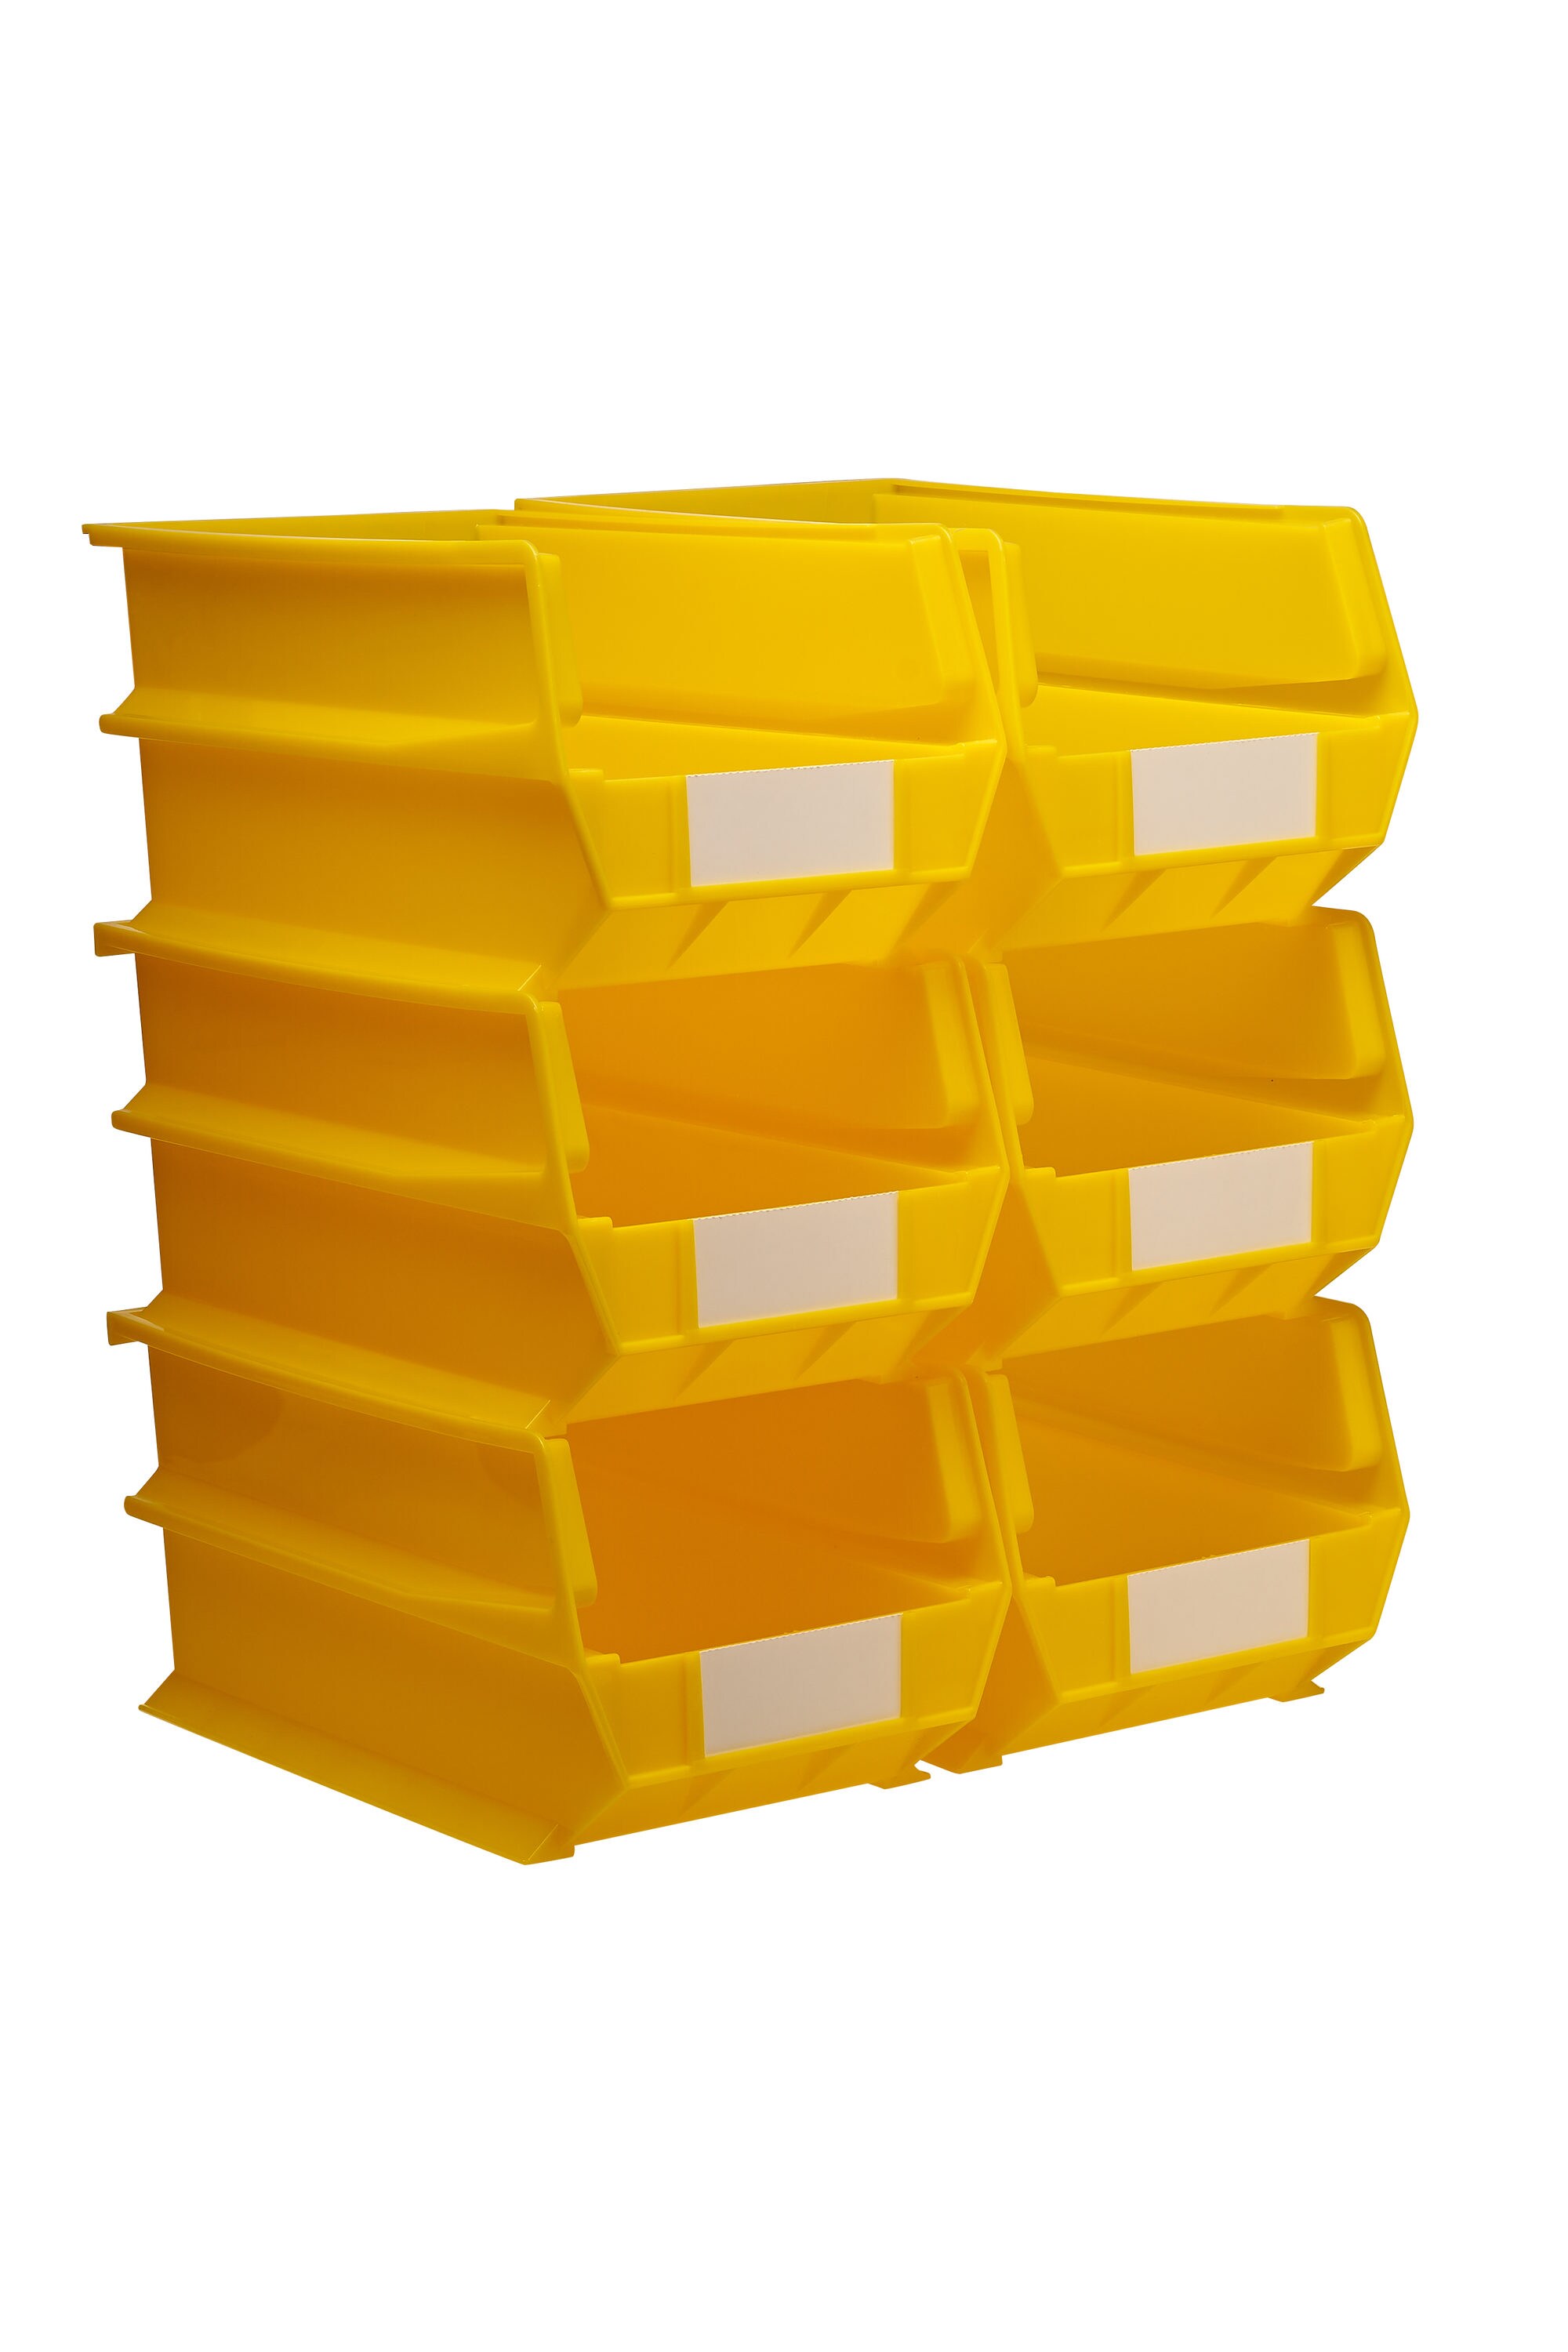 Project Source 5.2-in W x 4.33-in H x 6.69-in D Yellow Plastic Bin